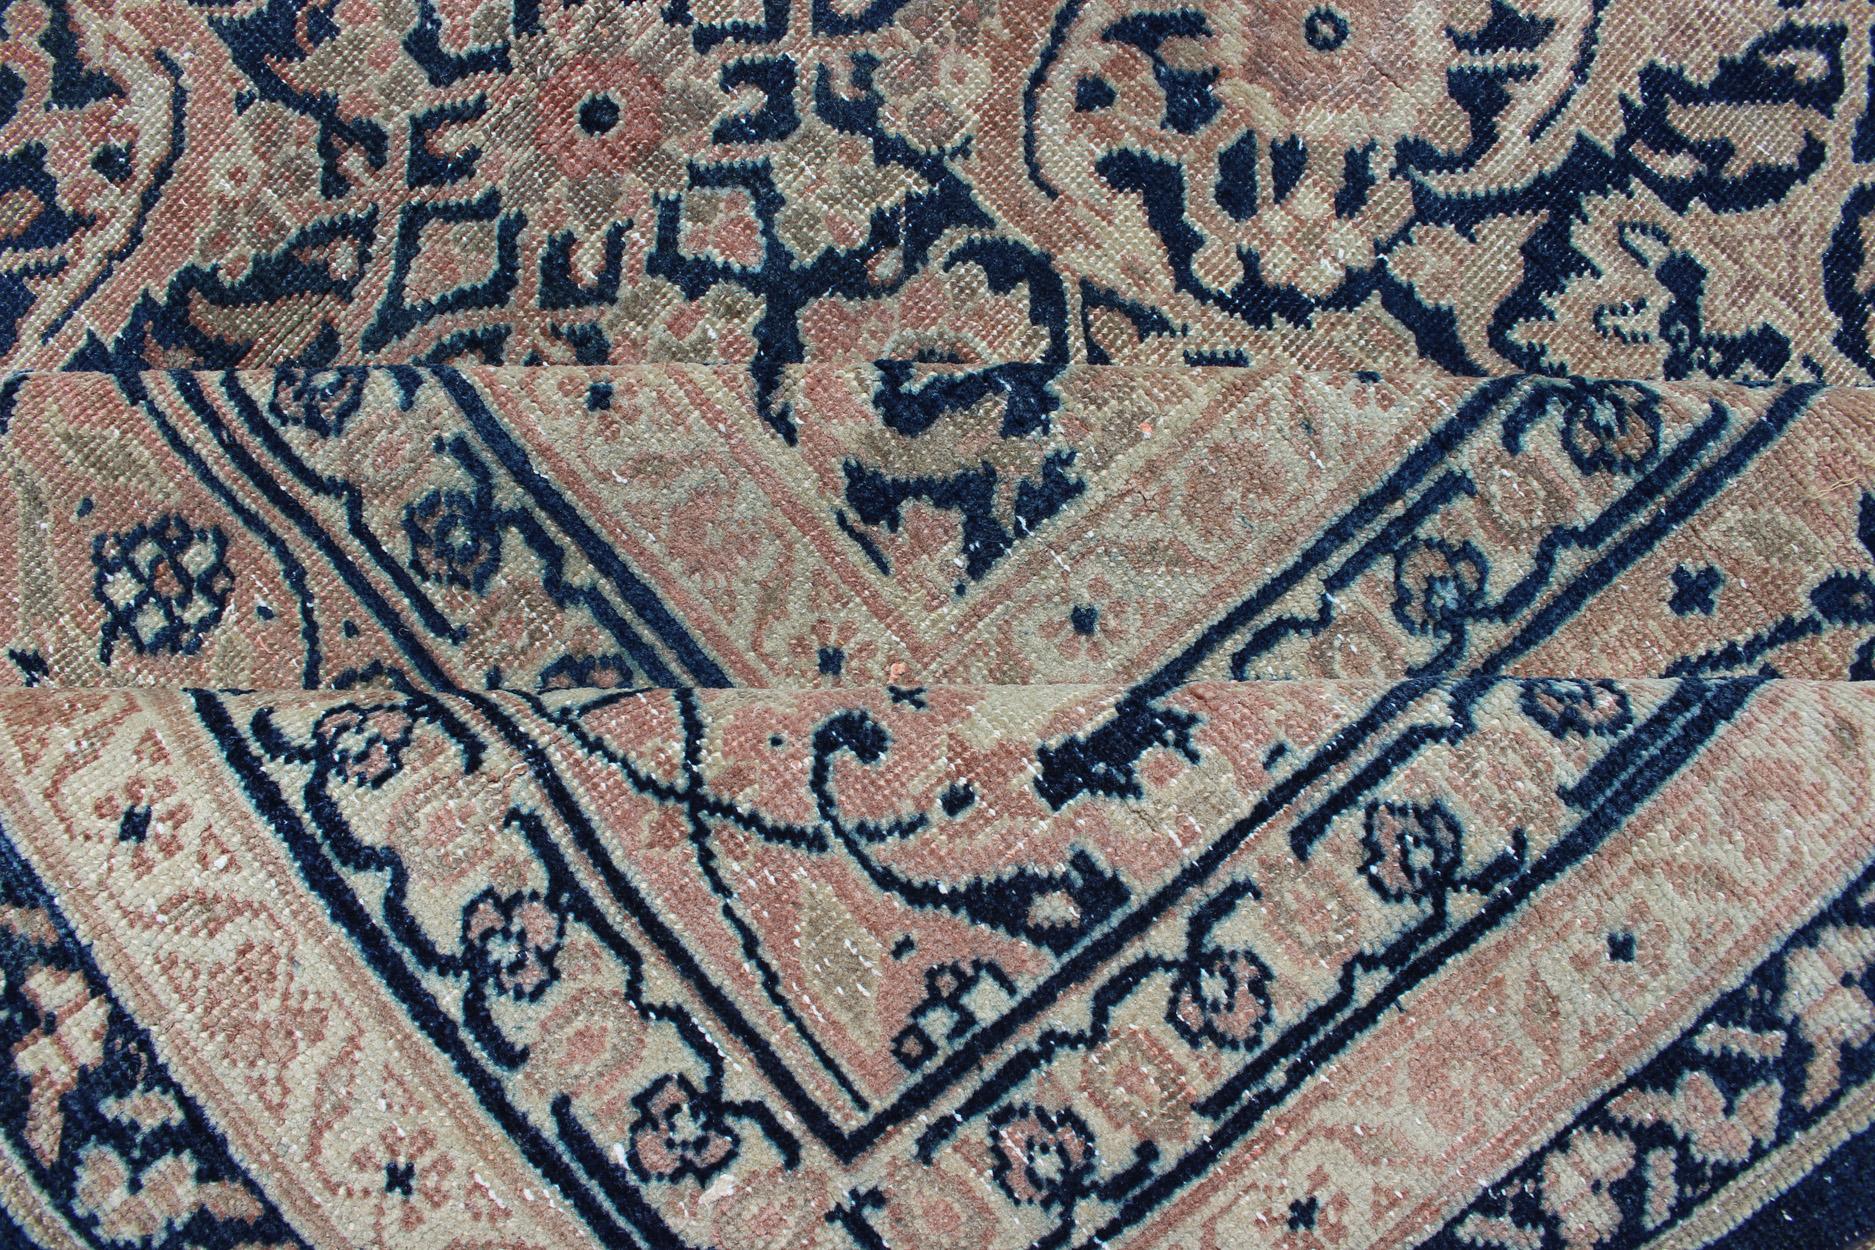 Antique Persian Tabriz Carpet with Geometric Herati Design in Dark Blue Tones For Sale 7